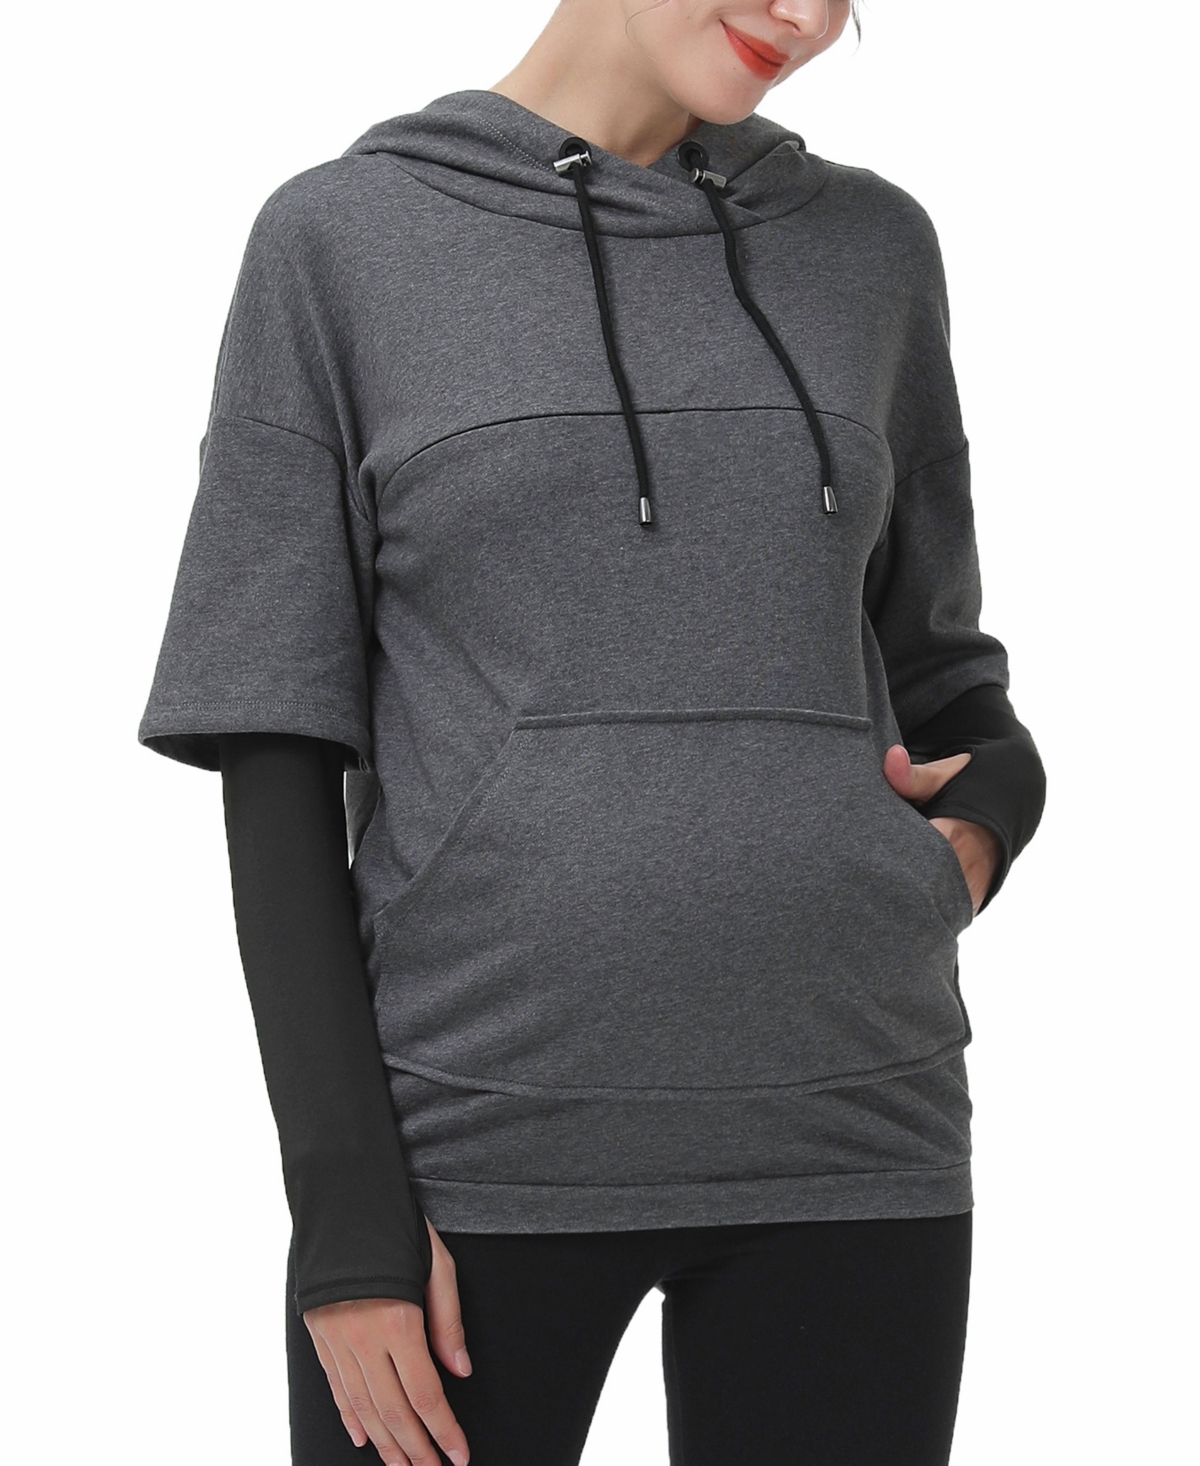 kimi + kai Maternity Nursing Active Hoodie Sweatshirt - Dark gray